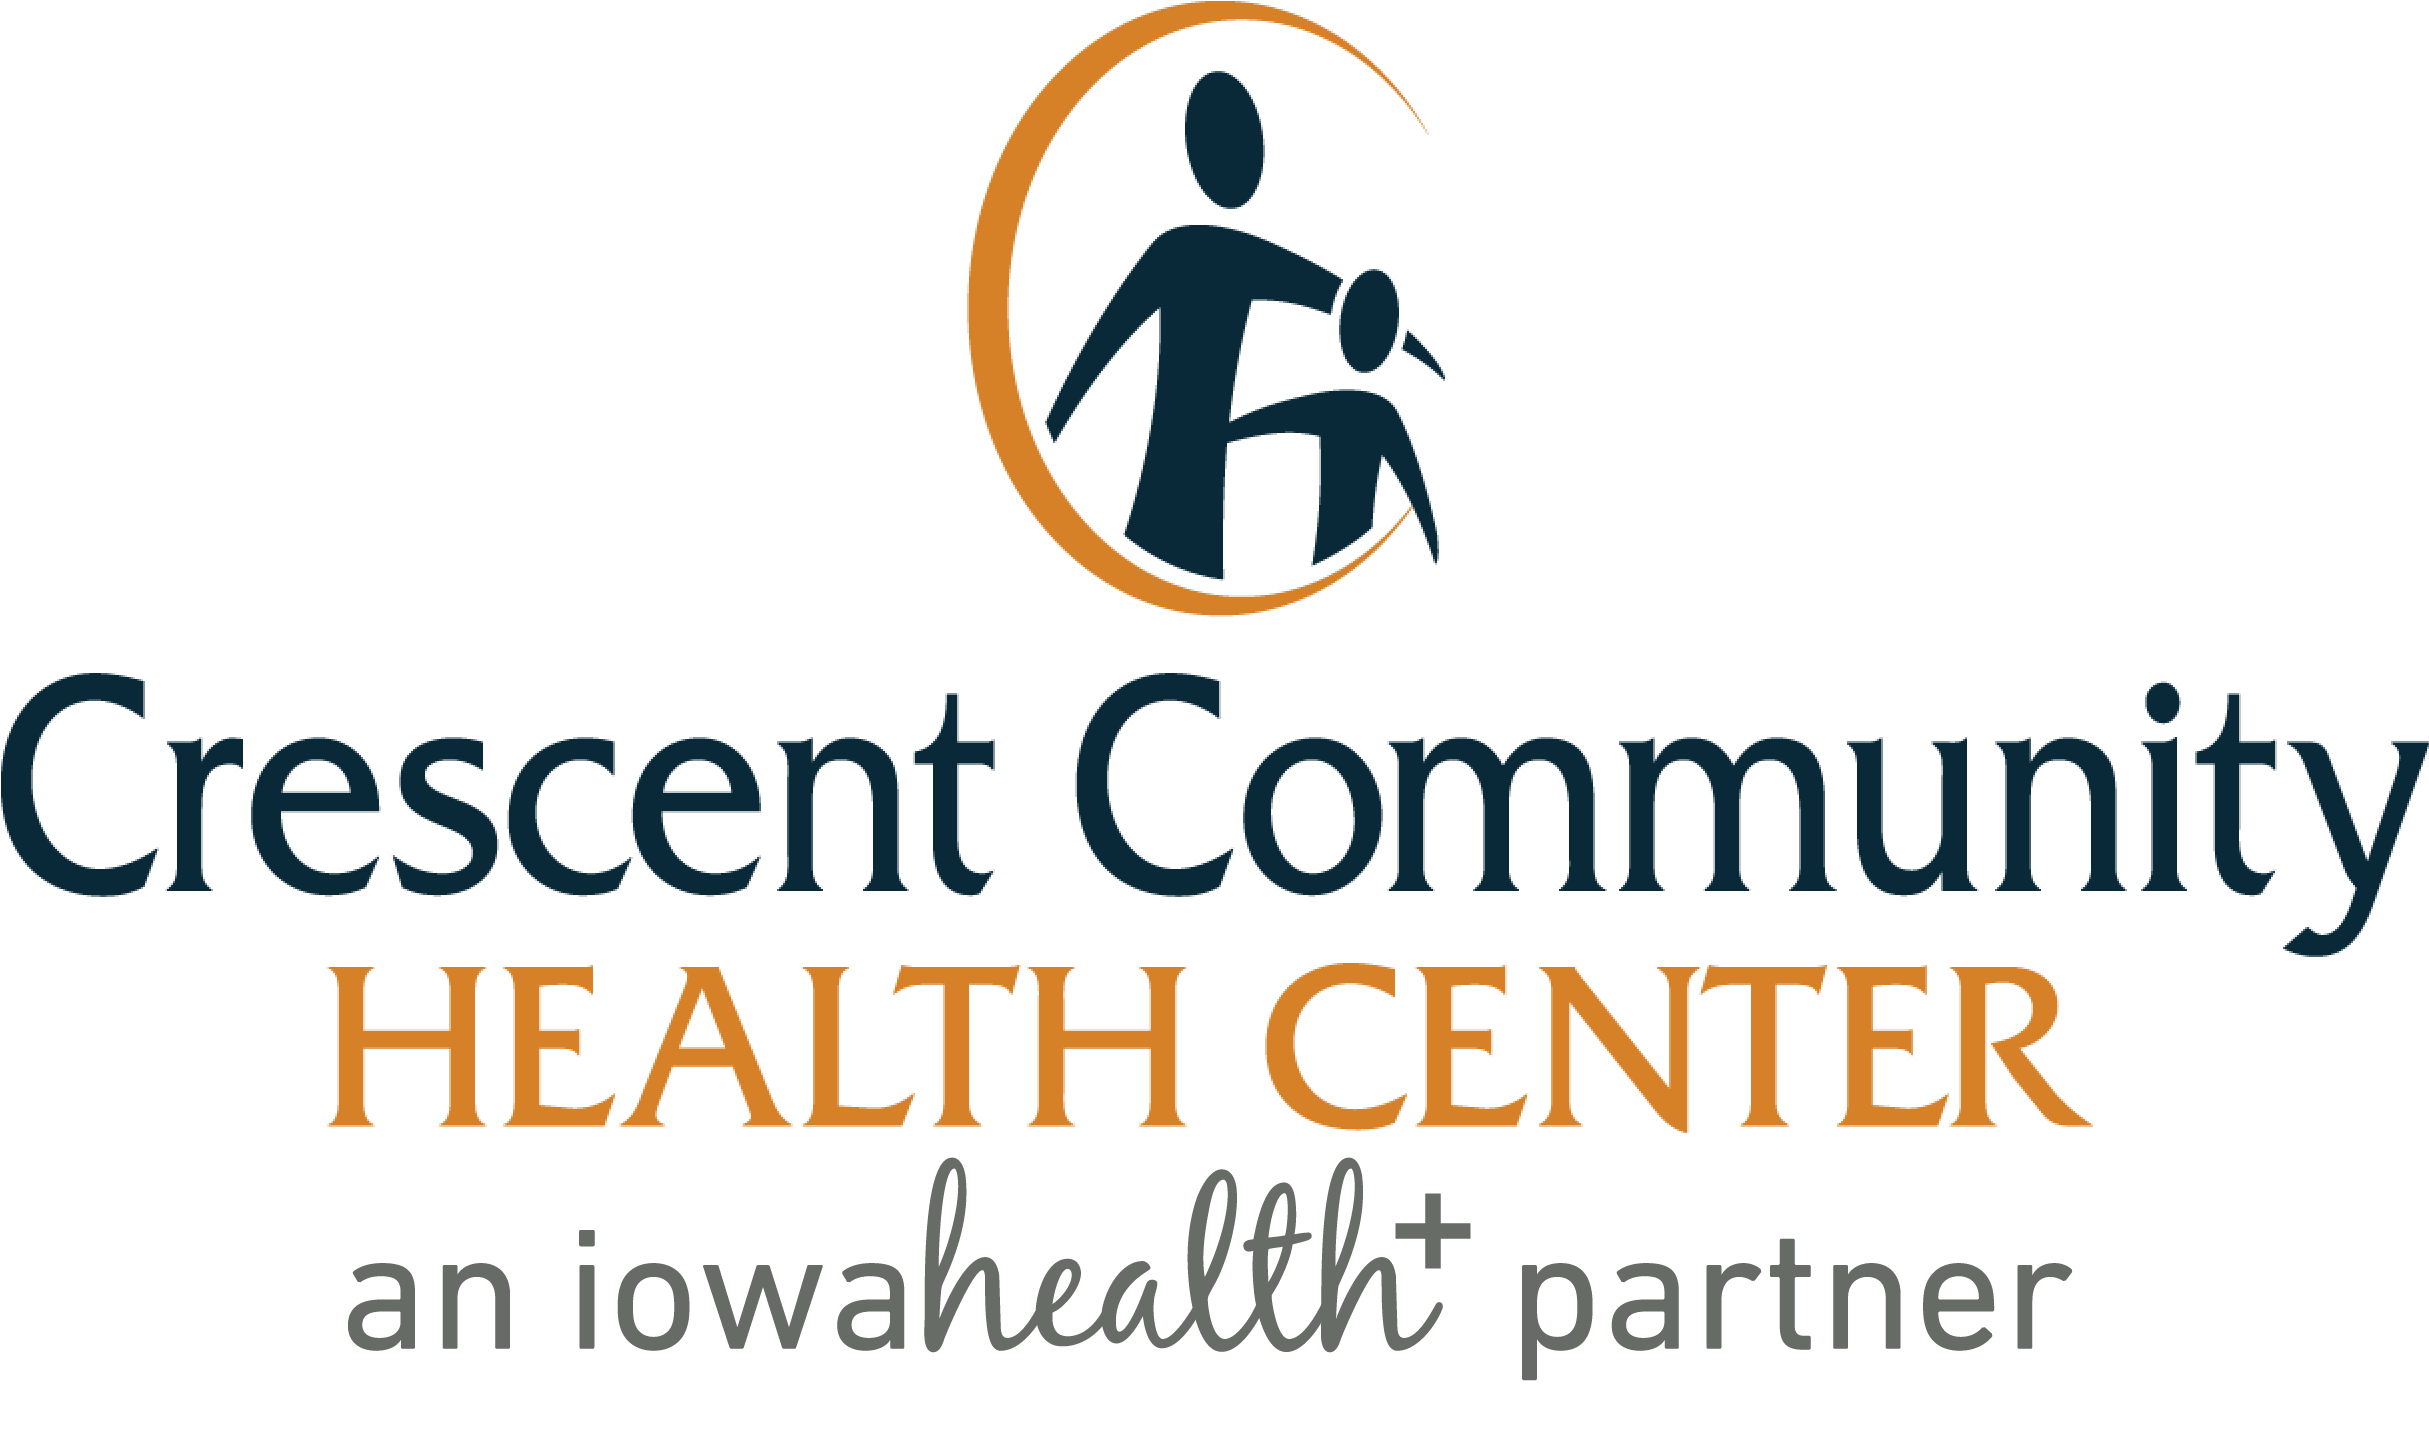 Crescent Community Health Center